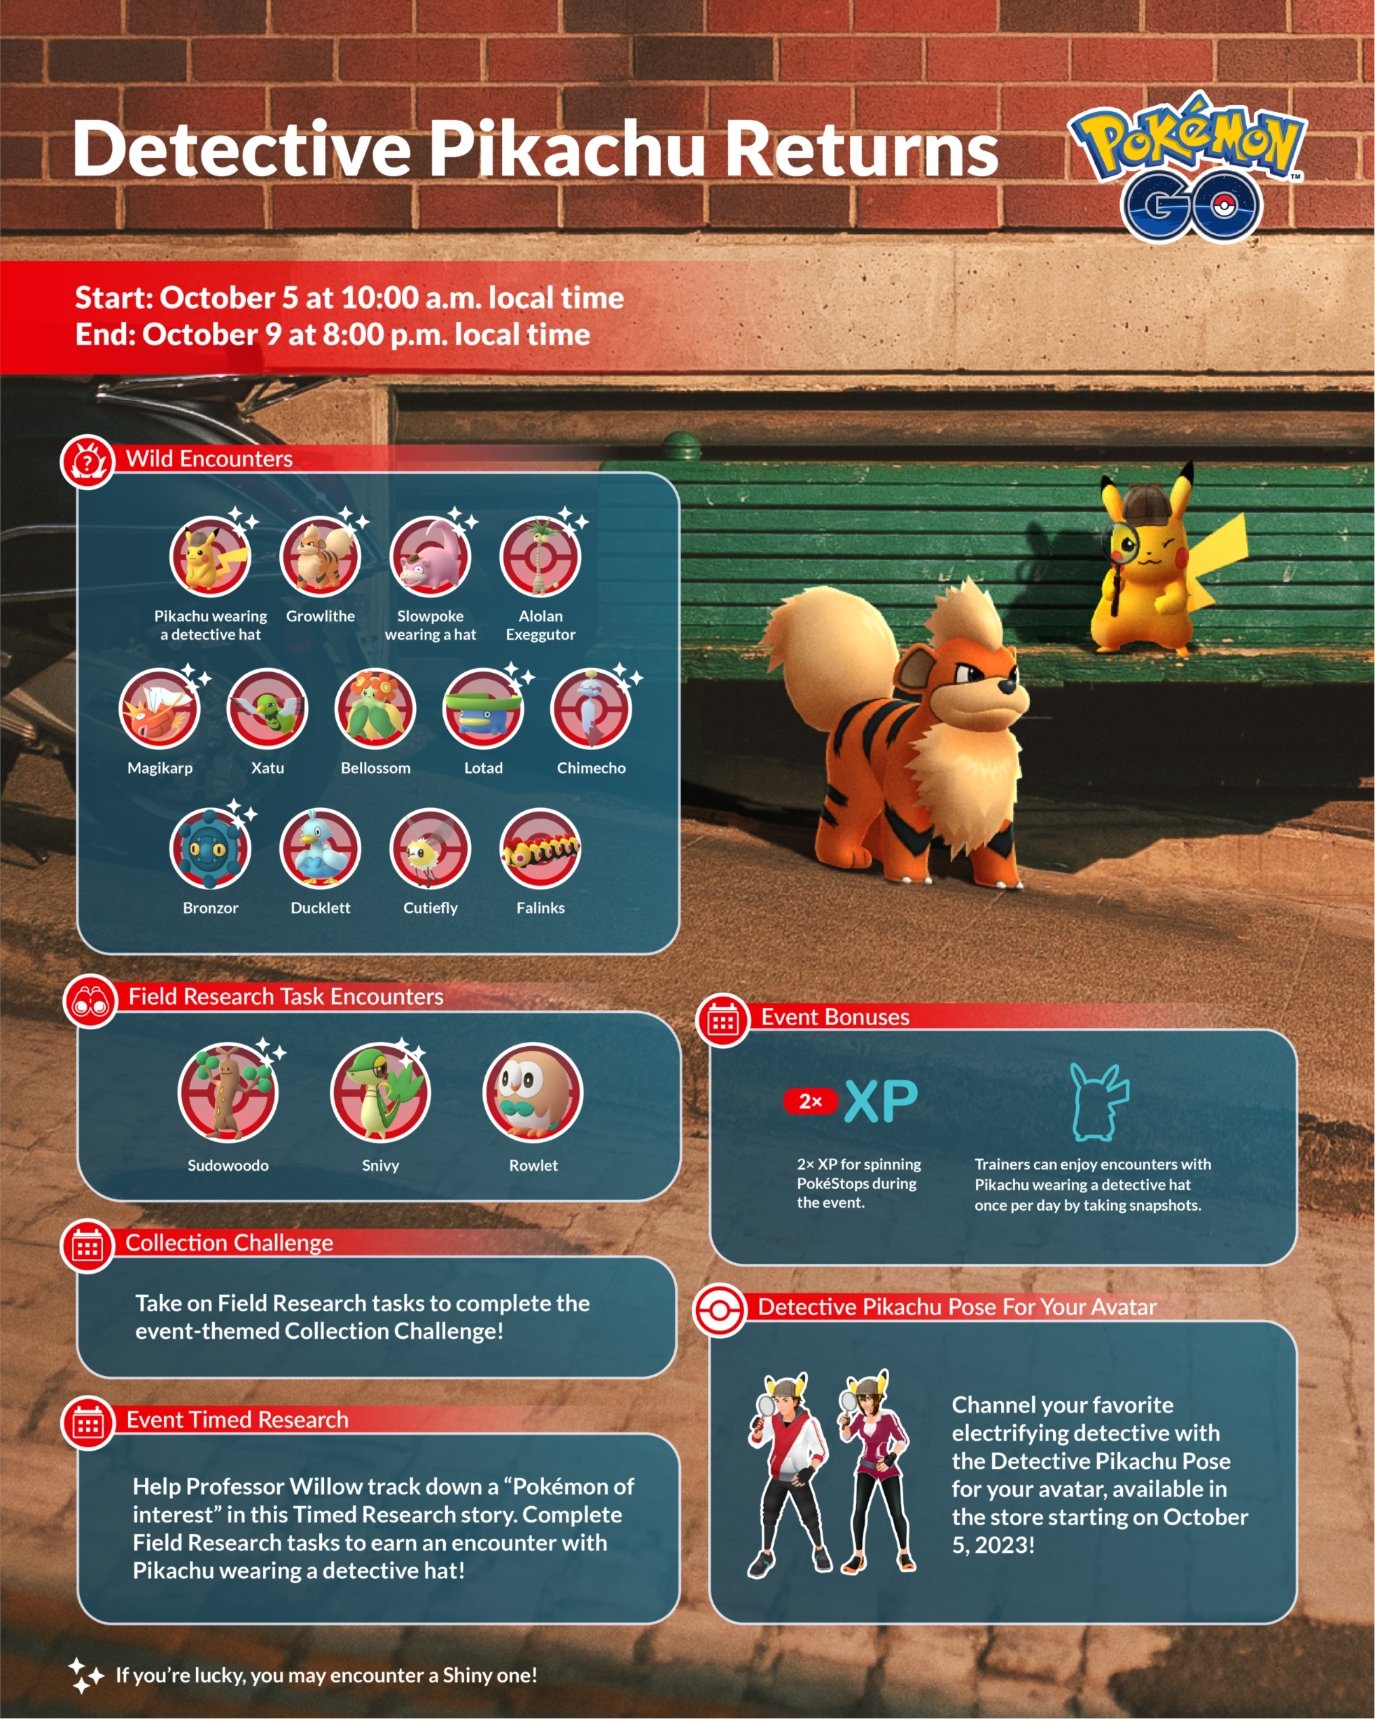 Pokémon GO - Detective Pikachu Returns event - Infographic